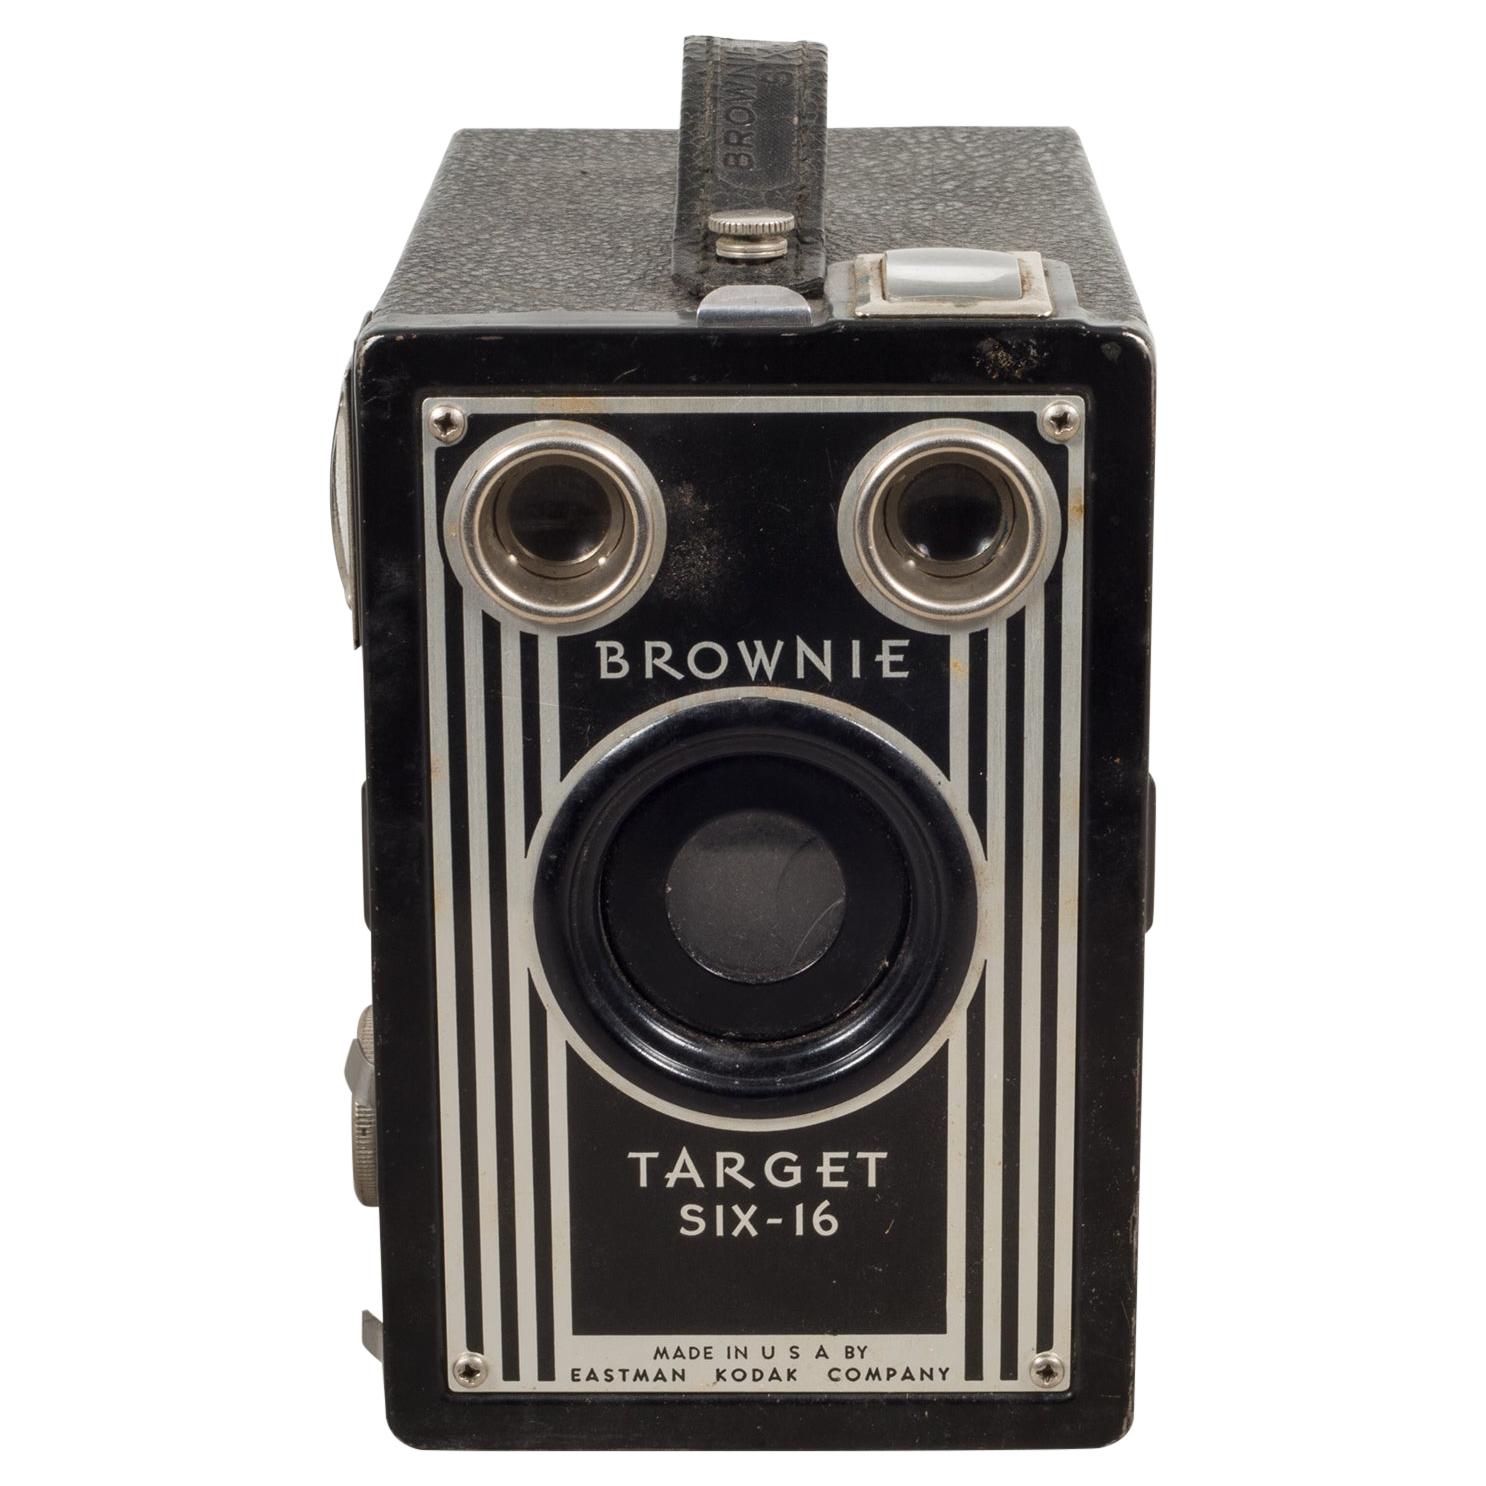 Brownie Target Six-16 Box Camera, circa 1946-1951